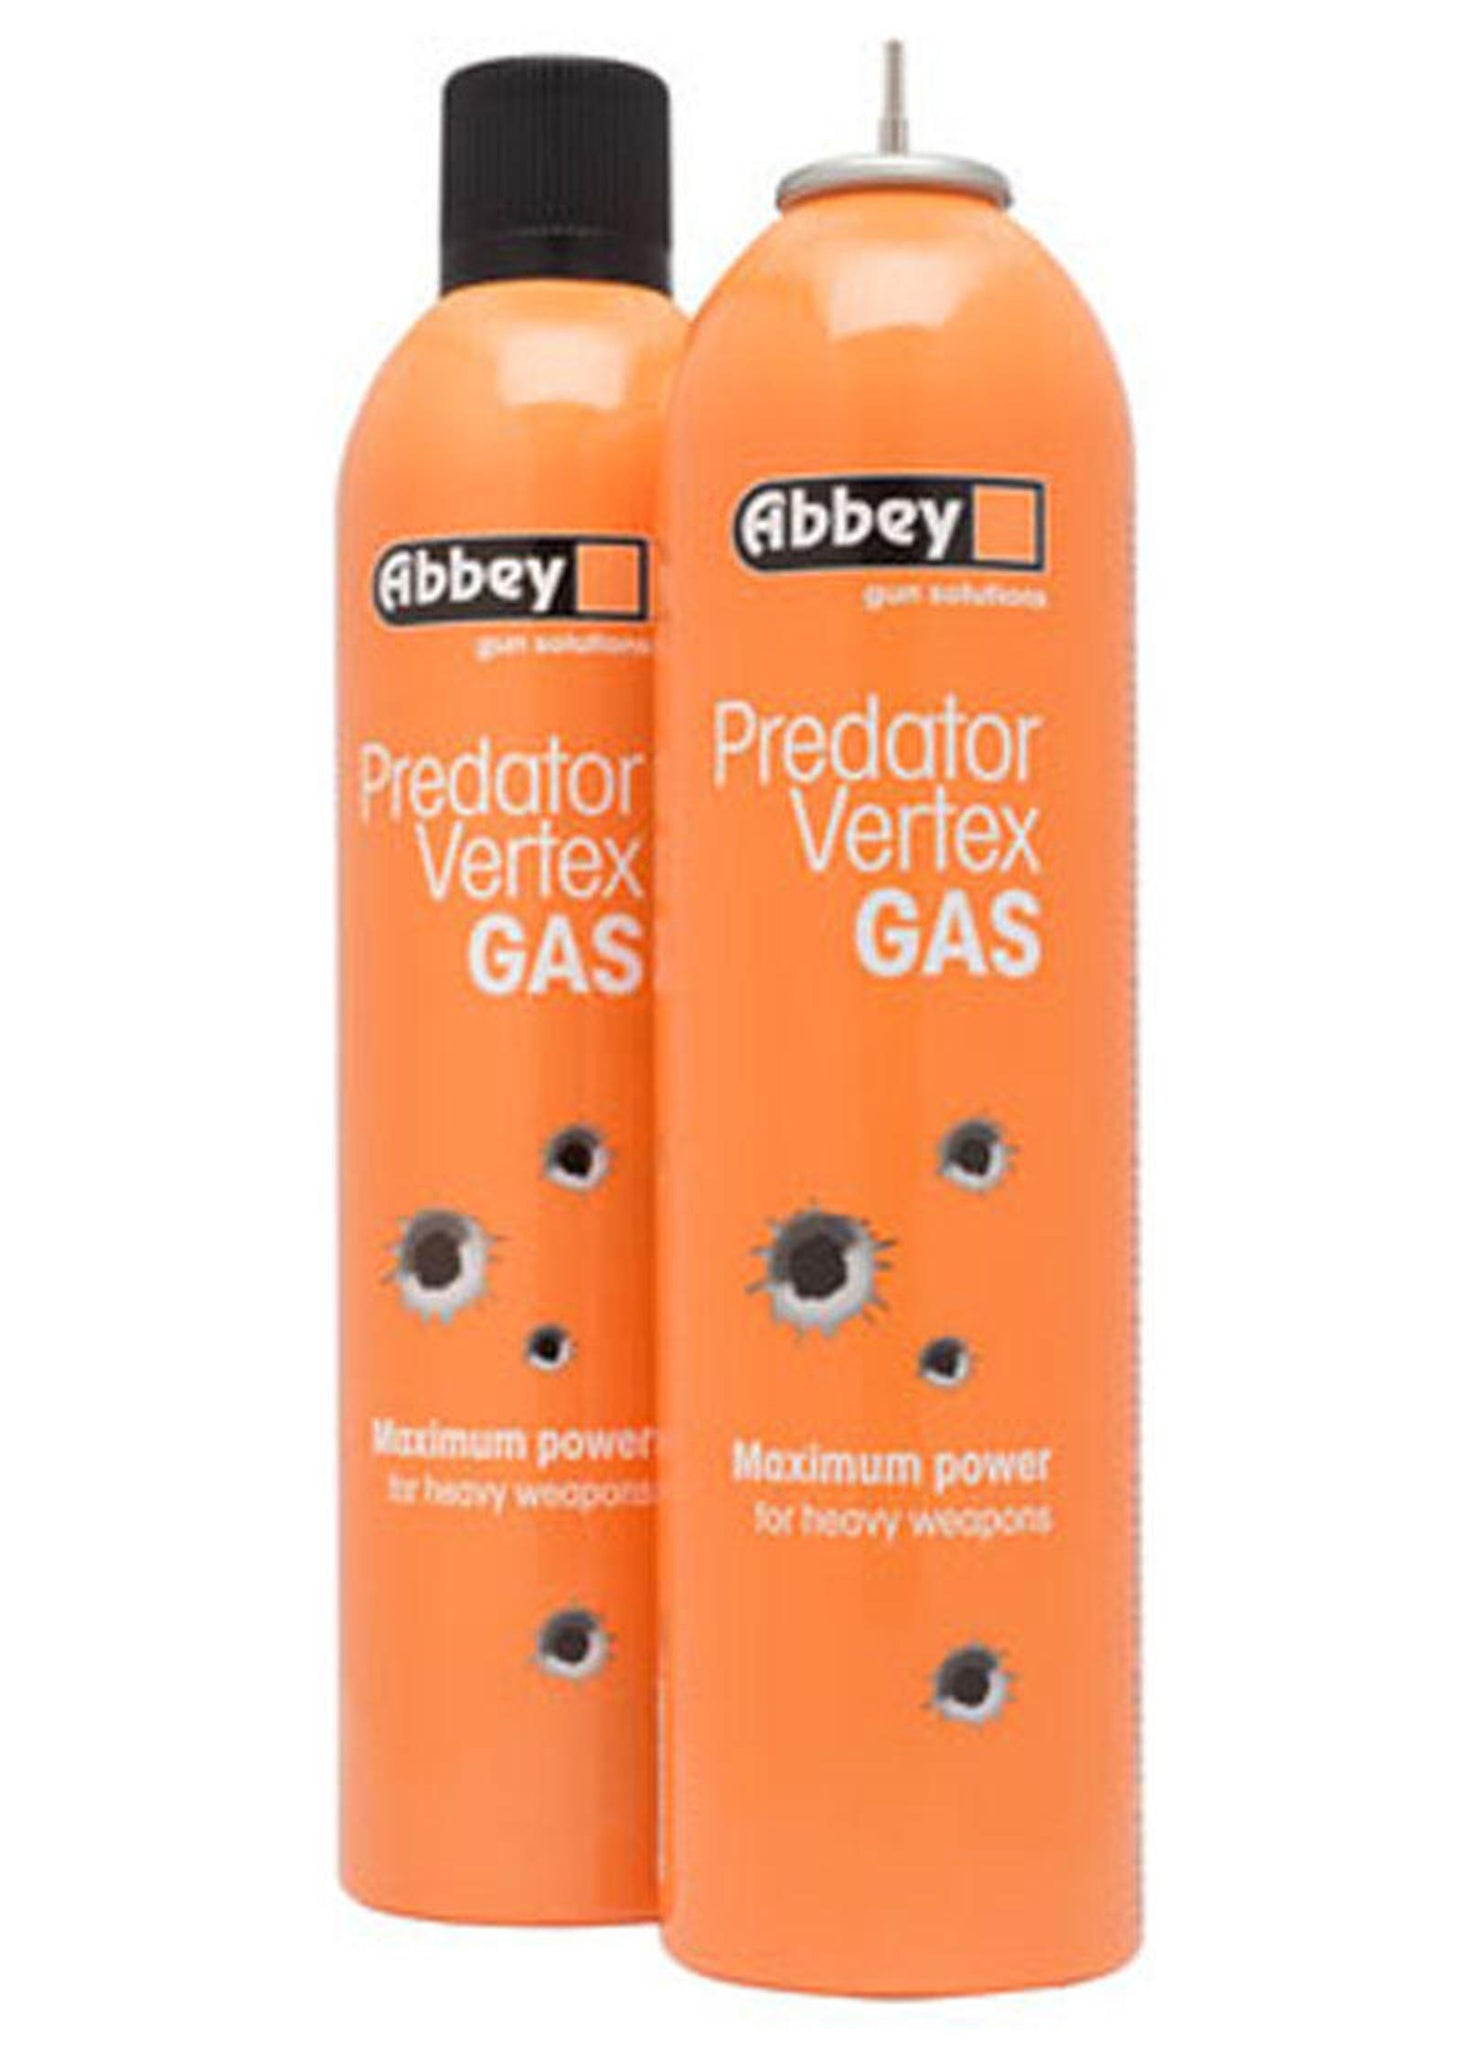 Abbey Predator Vertex Gas 700ml